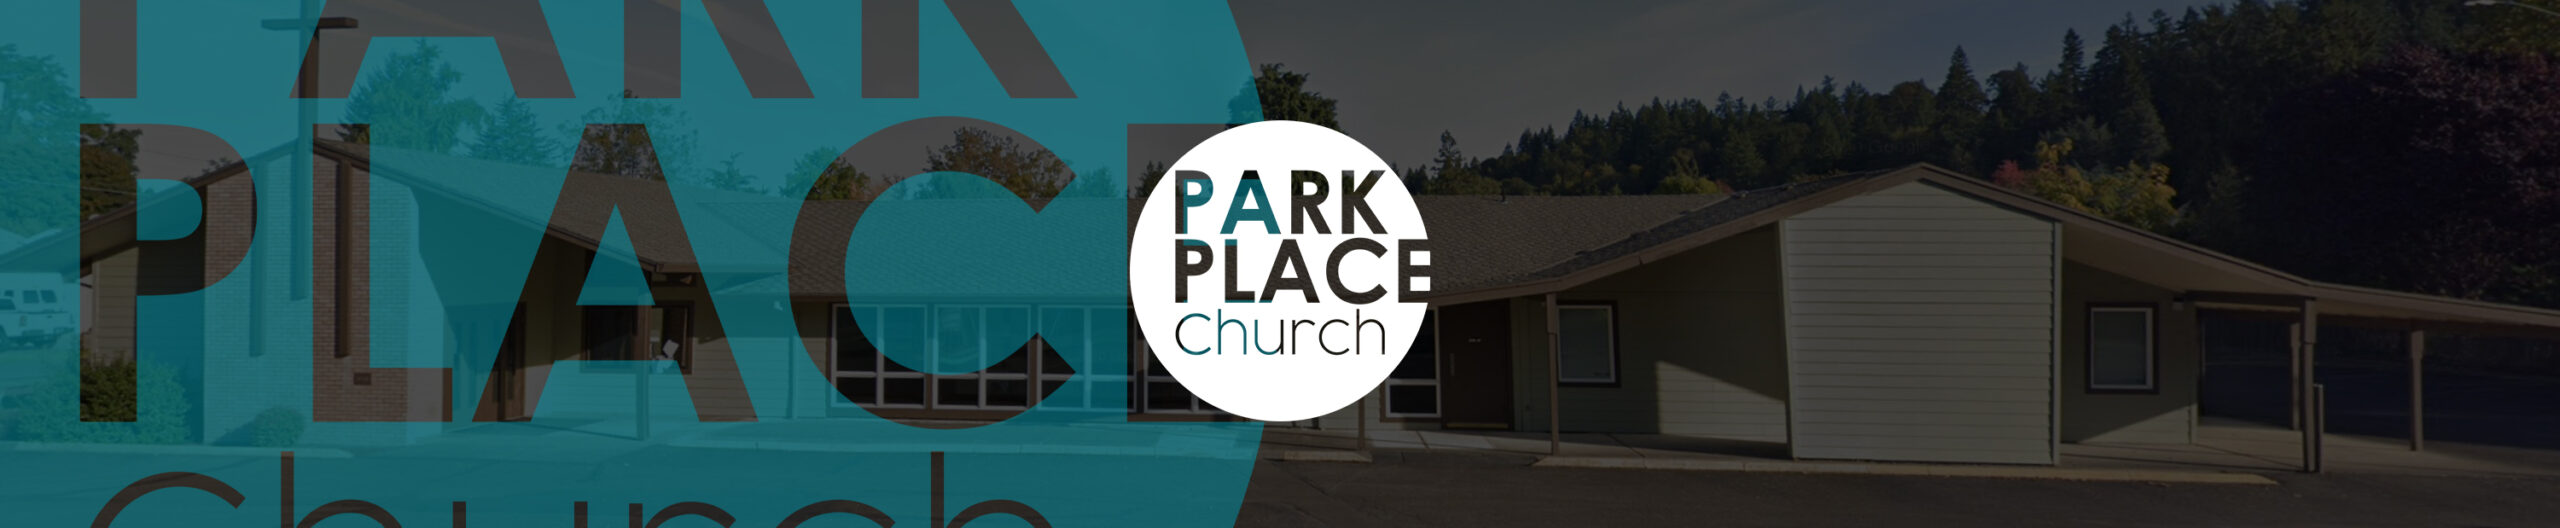 Park place church